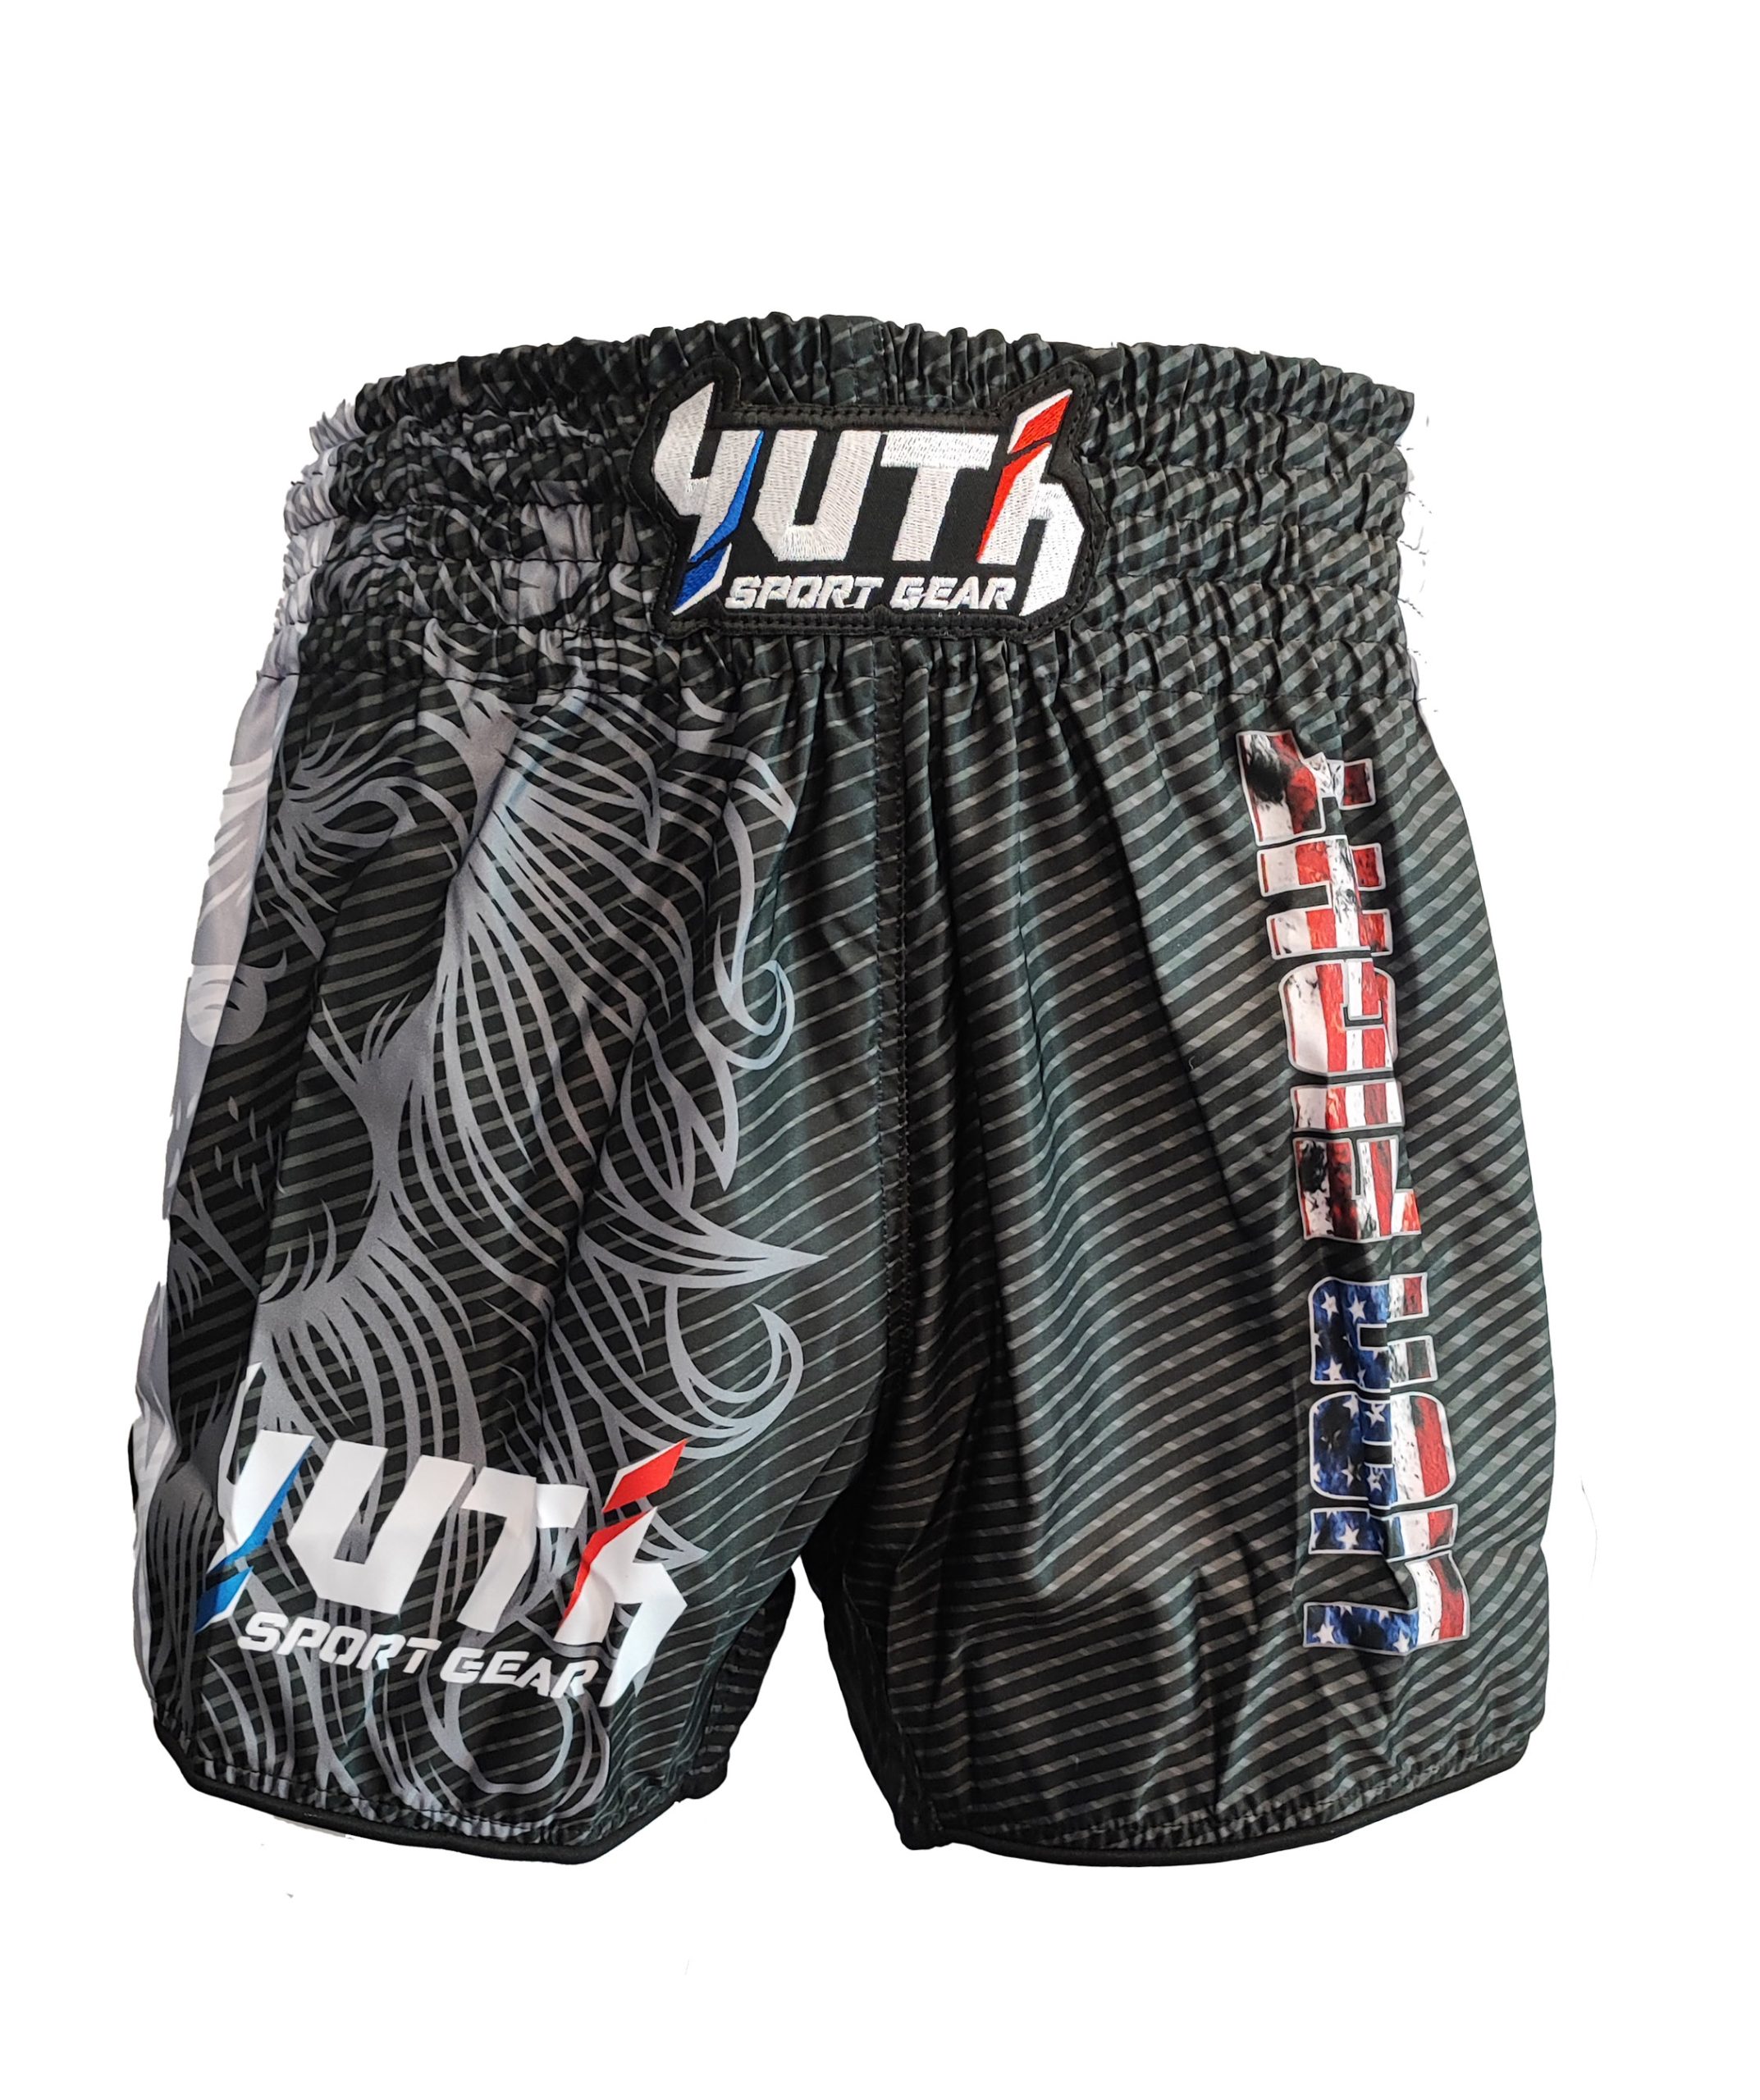 Yuth Sport Gear Muay Thai Shorts Lion Fight Black